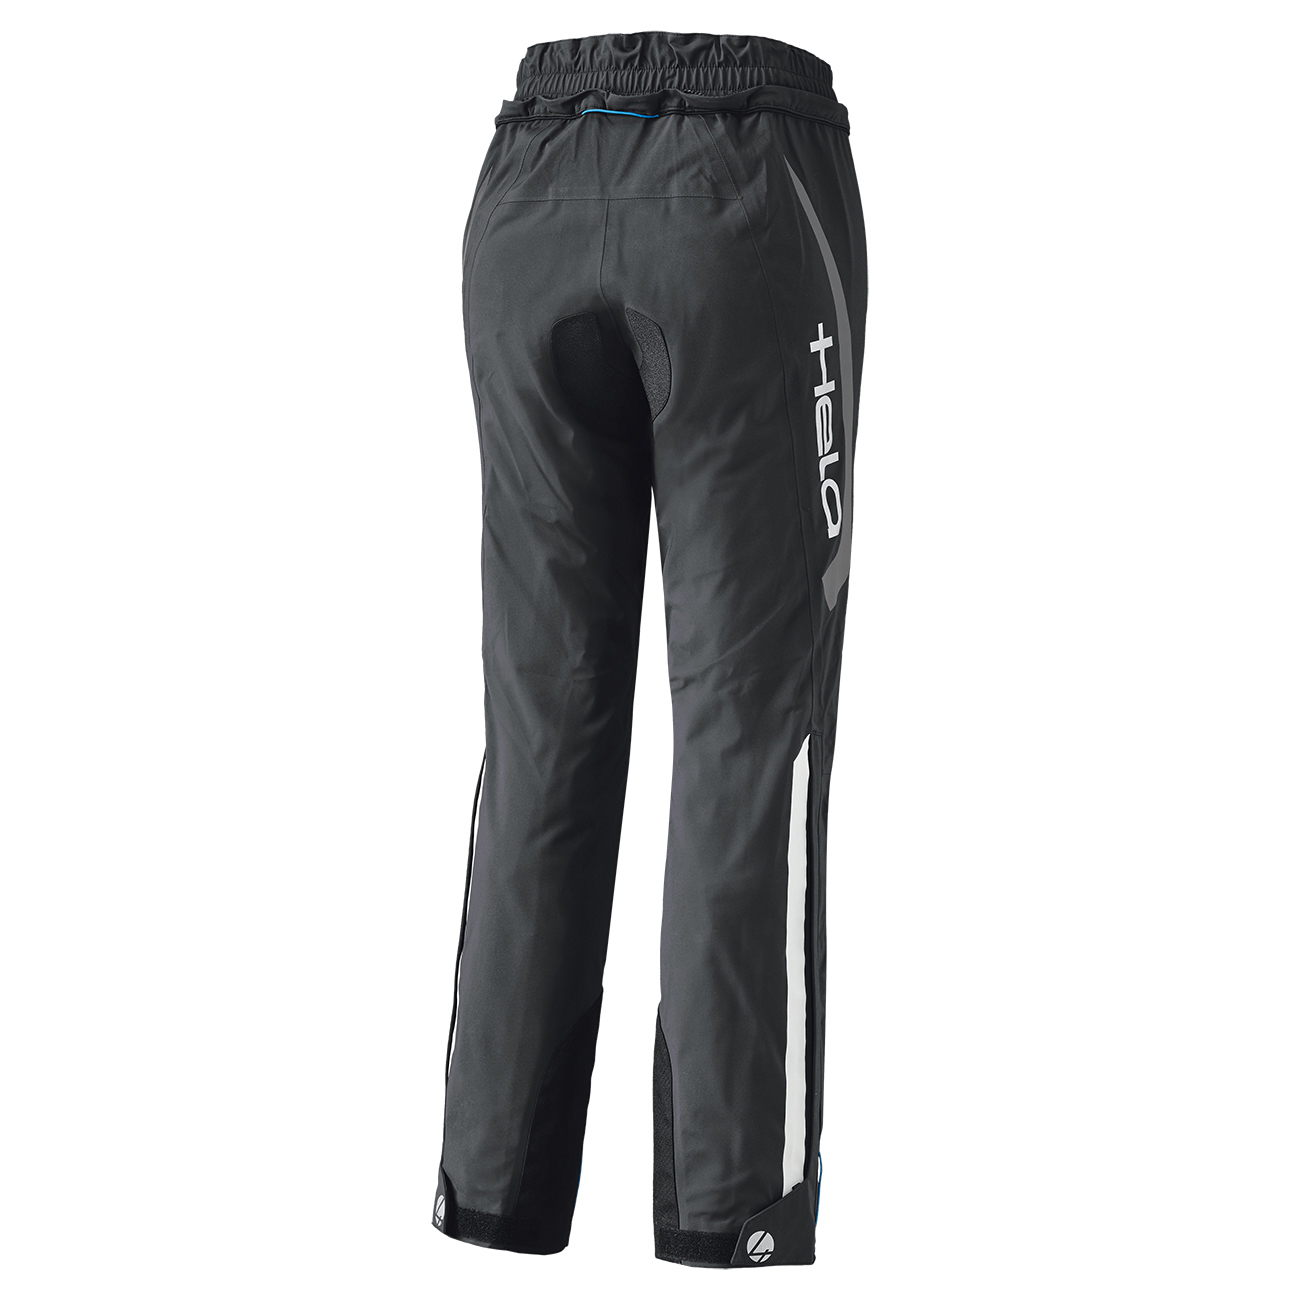 Clip-in GTX BASE GORE-TEX® Packlite pantalone 